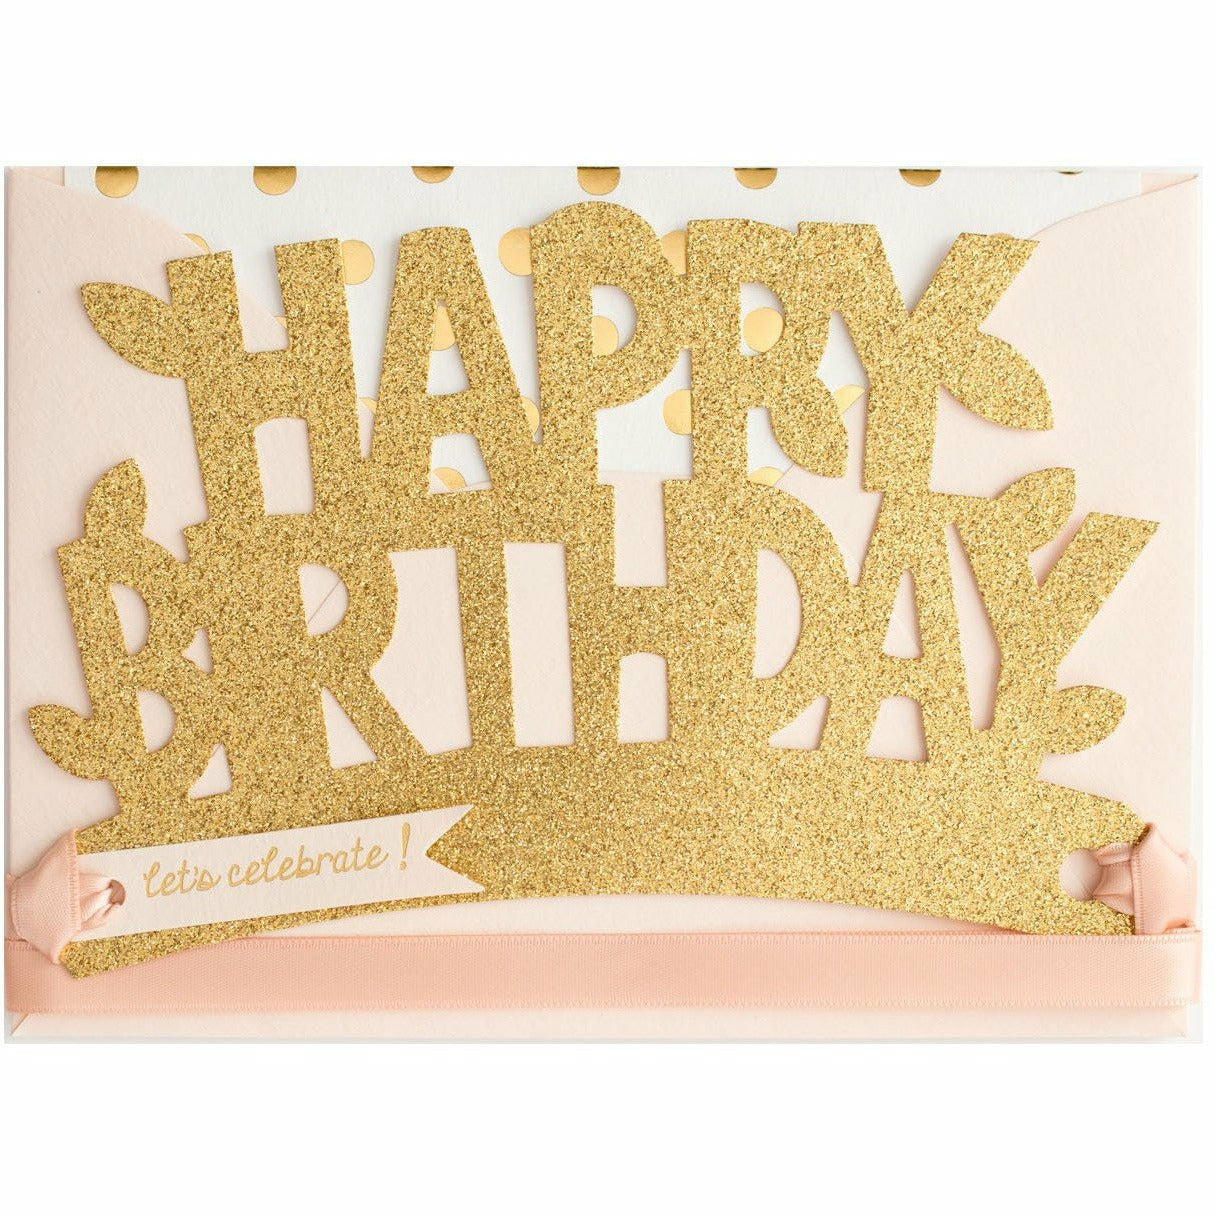 Happy Birthday Blush & Gold Glitter Crown Card - The First Snow